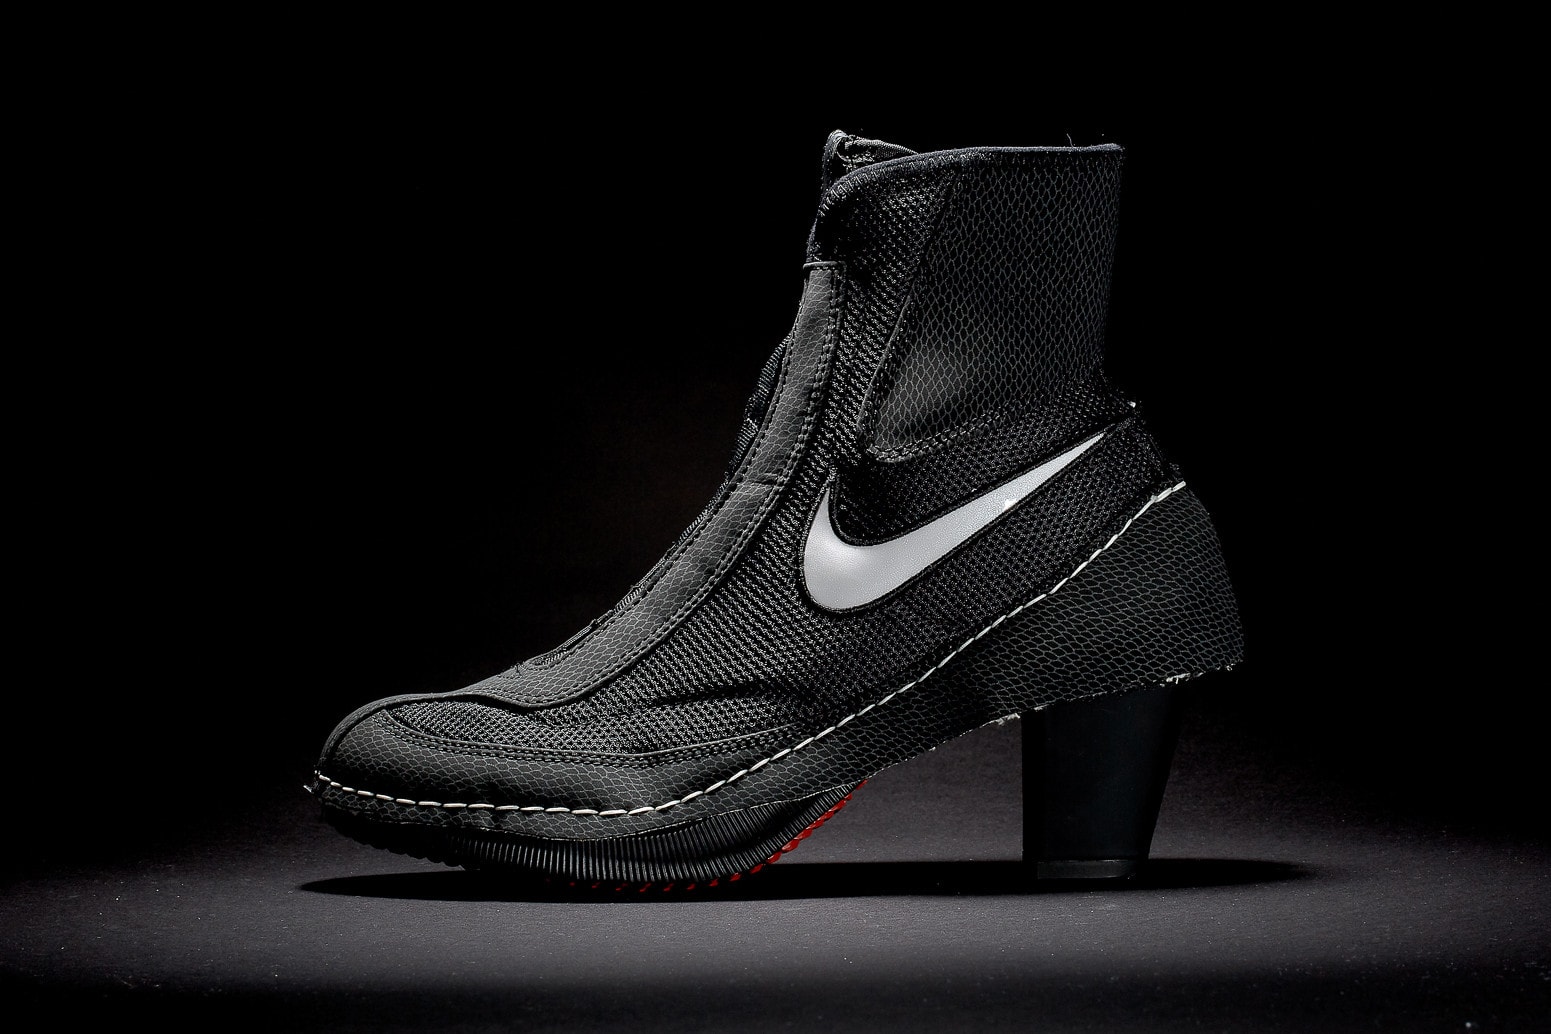 COMME des GARÇONS x Nike Machomai 聯乘高跟鞋正式上架